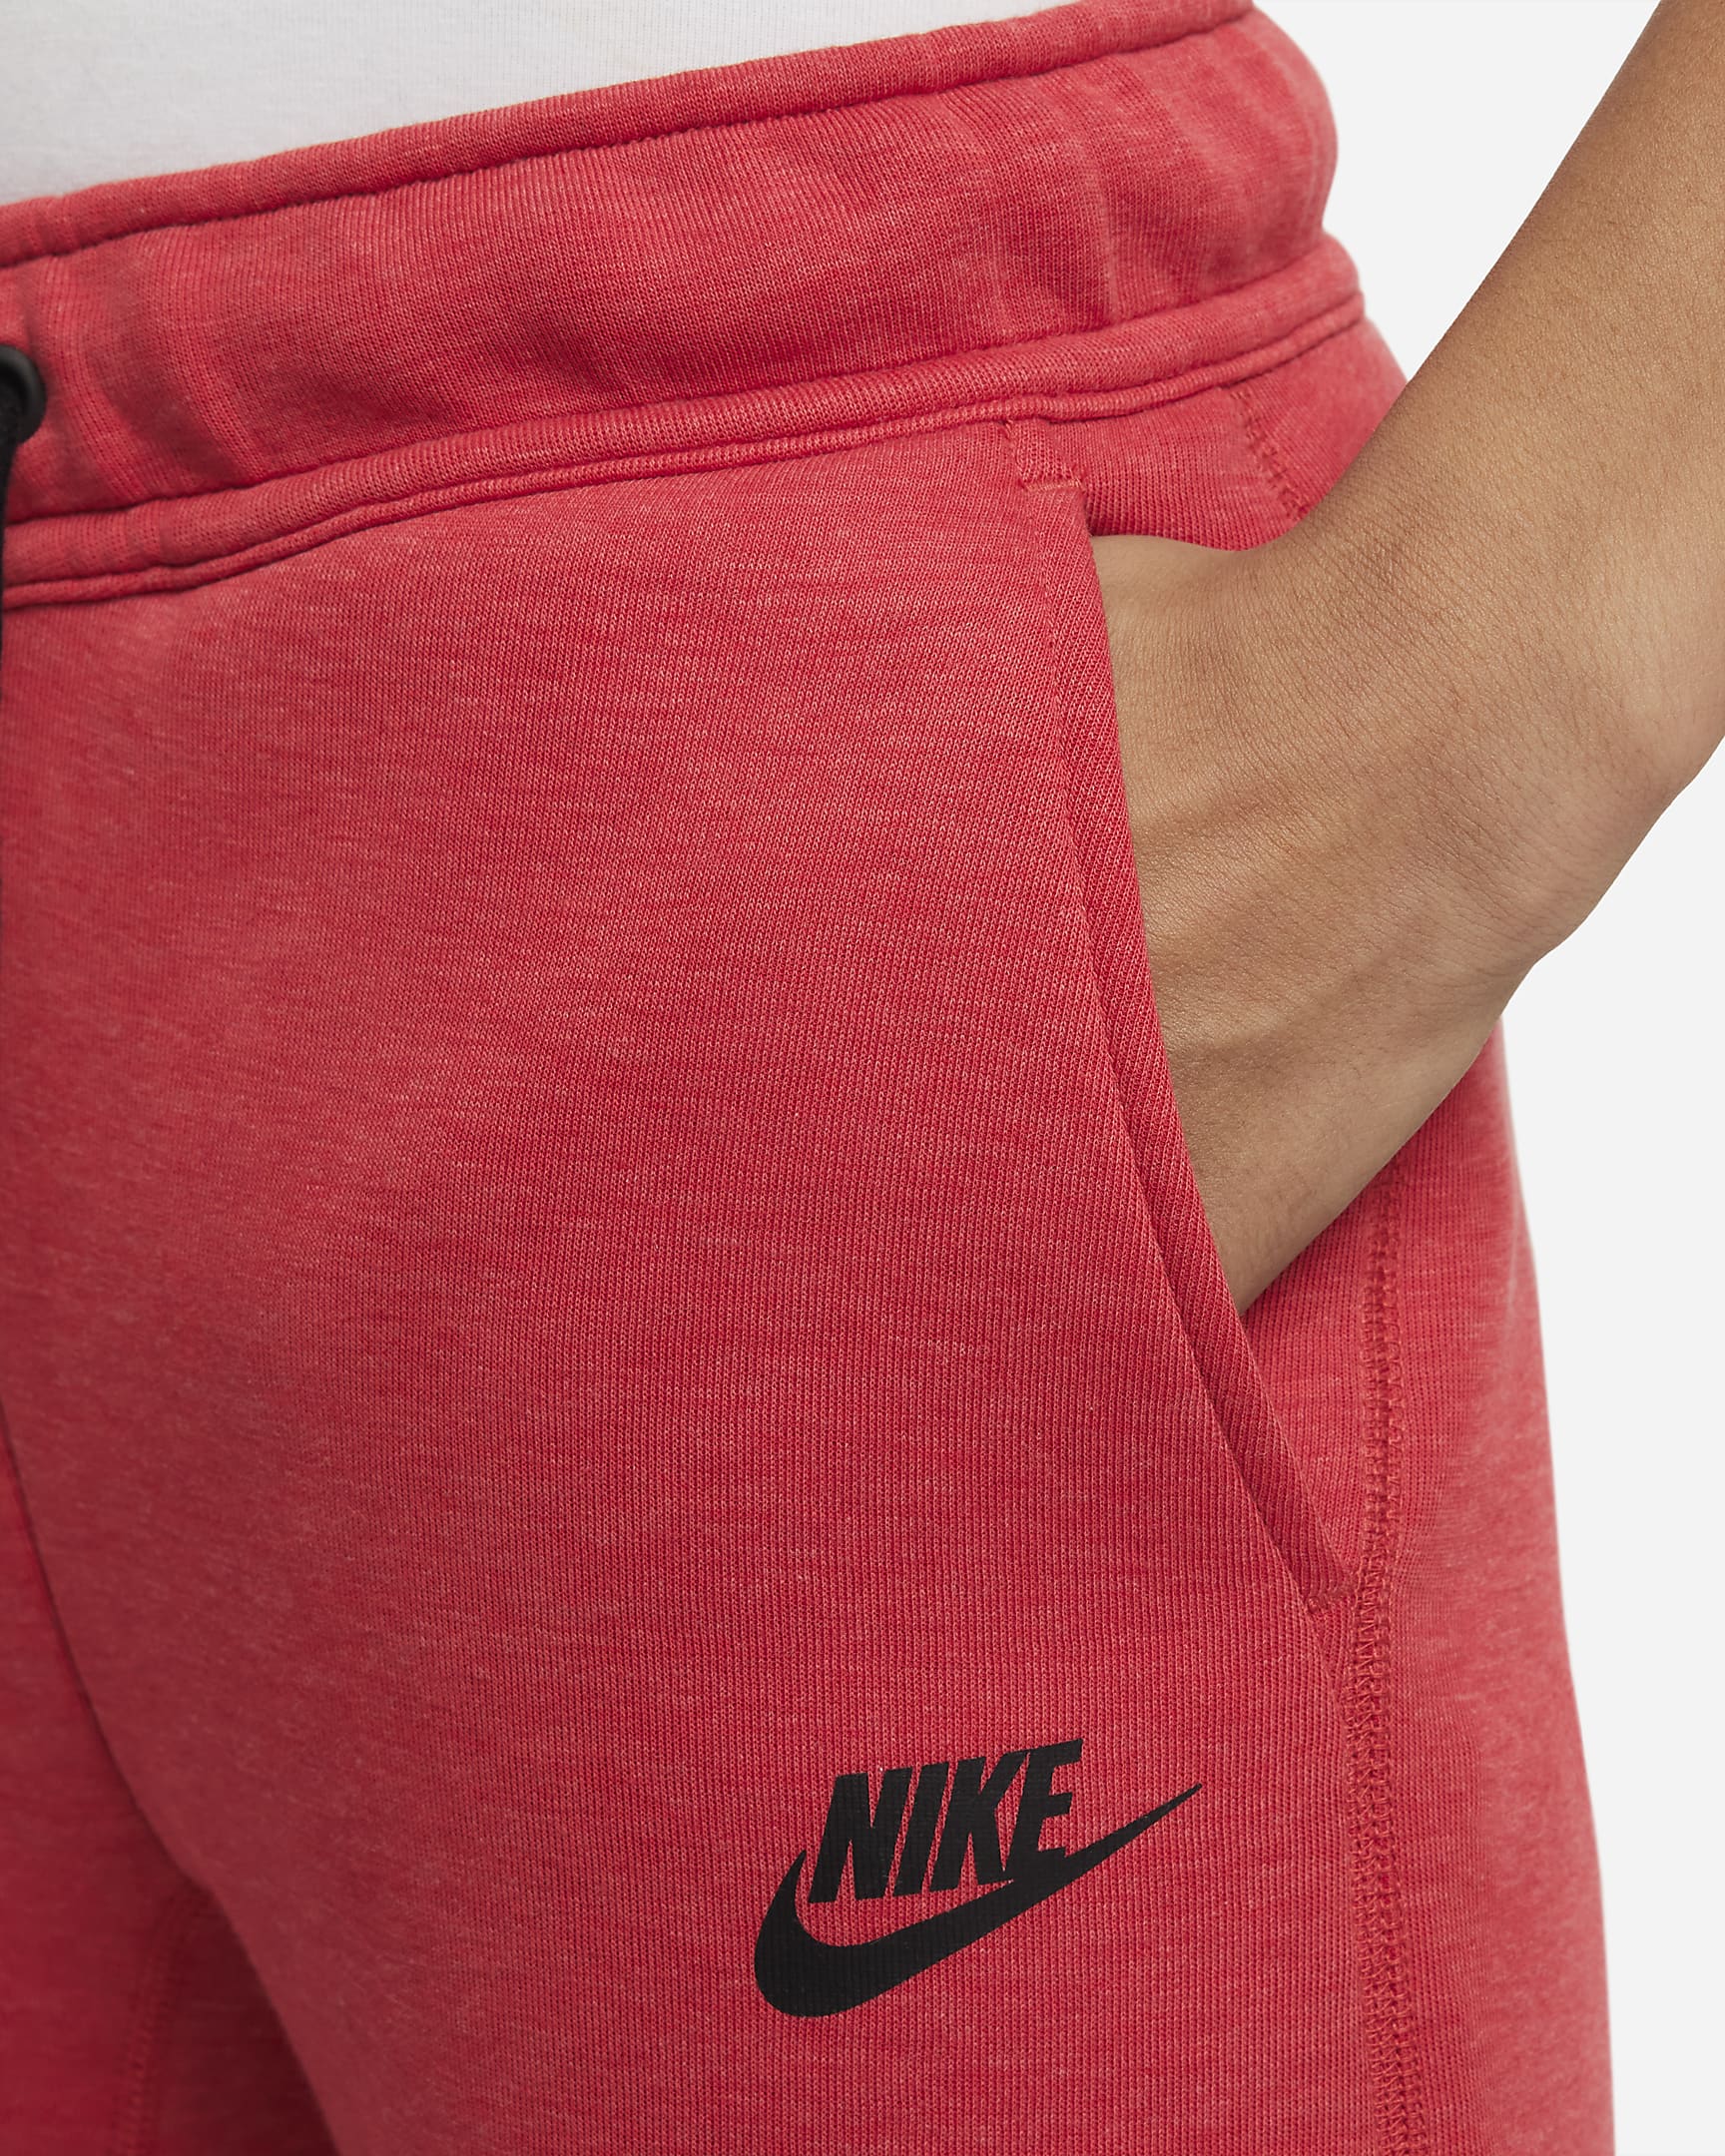 Nike Sportswear Tech Fleece Hose für ältere Kinder (Jungen) - Light University Red Heather/Schwarz/Schwarz